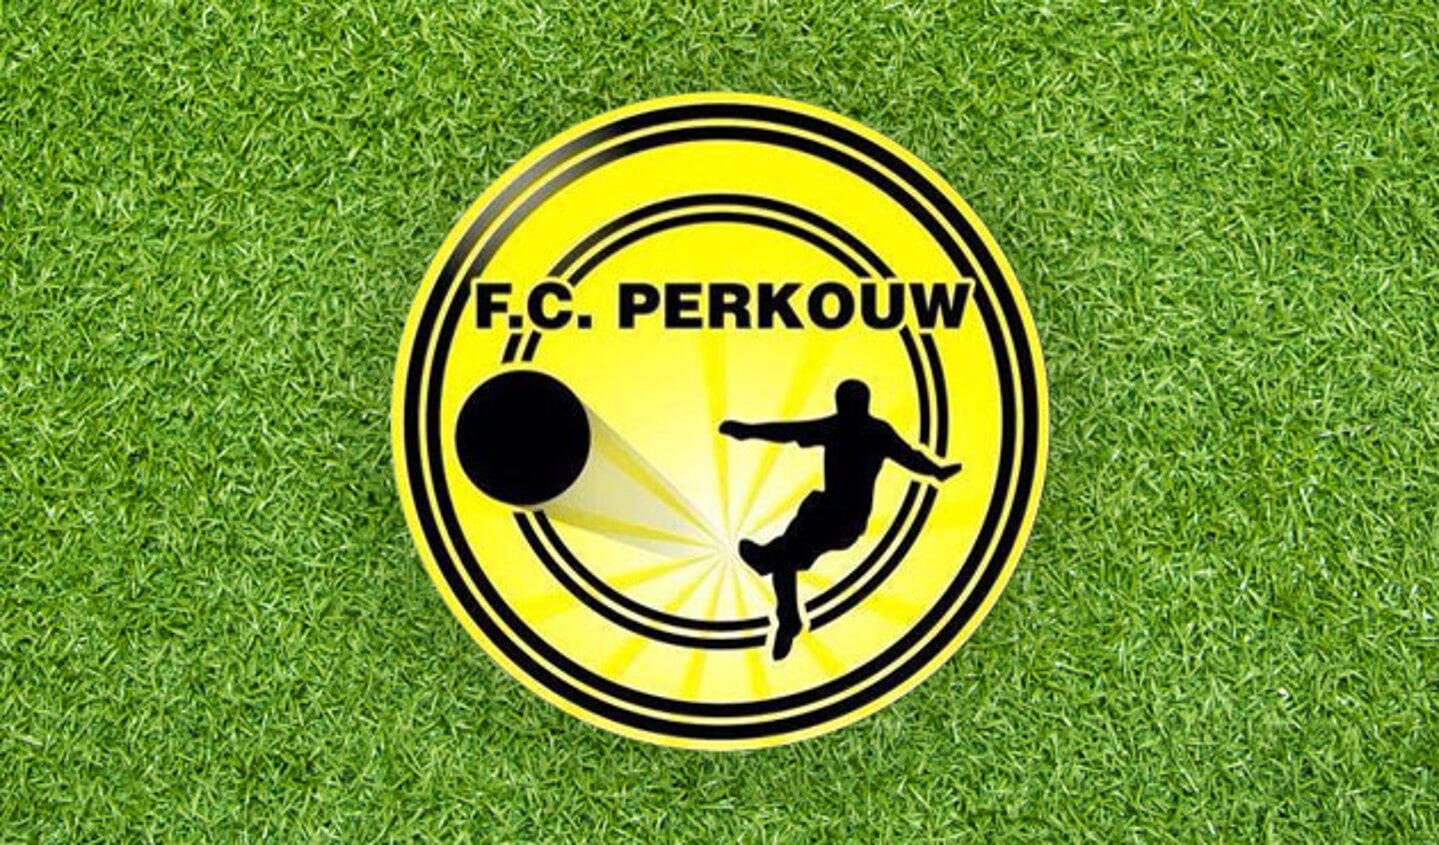 Laatste seizoen Elgar Mudde in hoofdmacht FC Perkouw